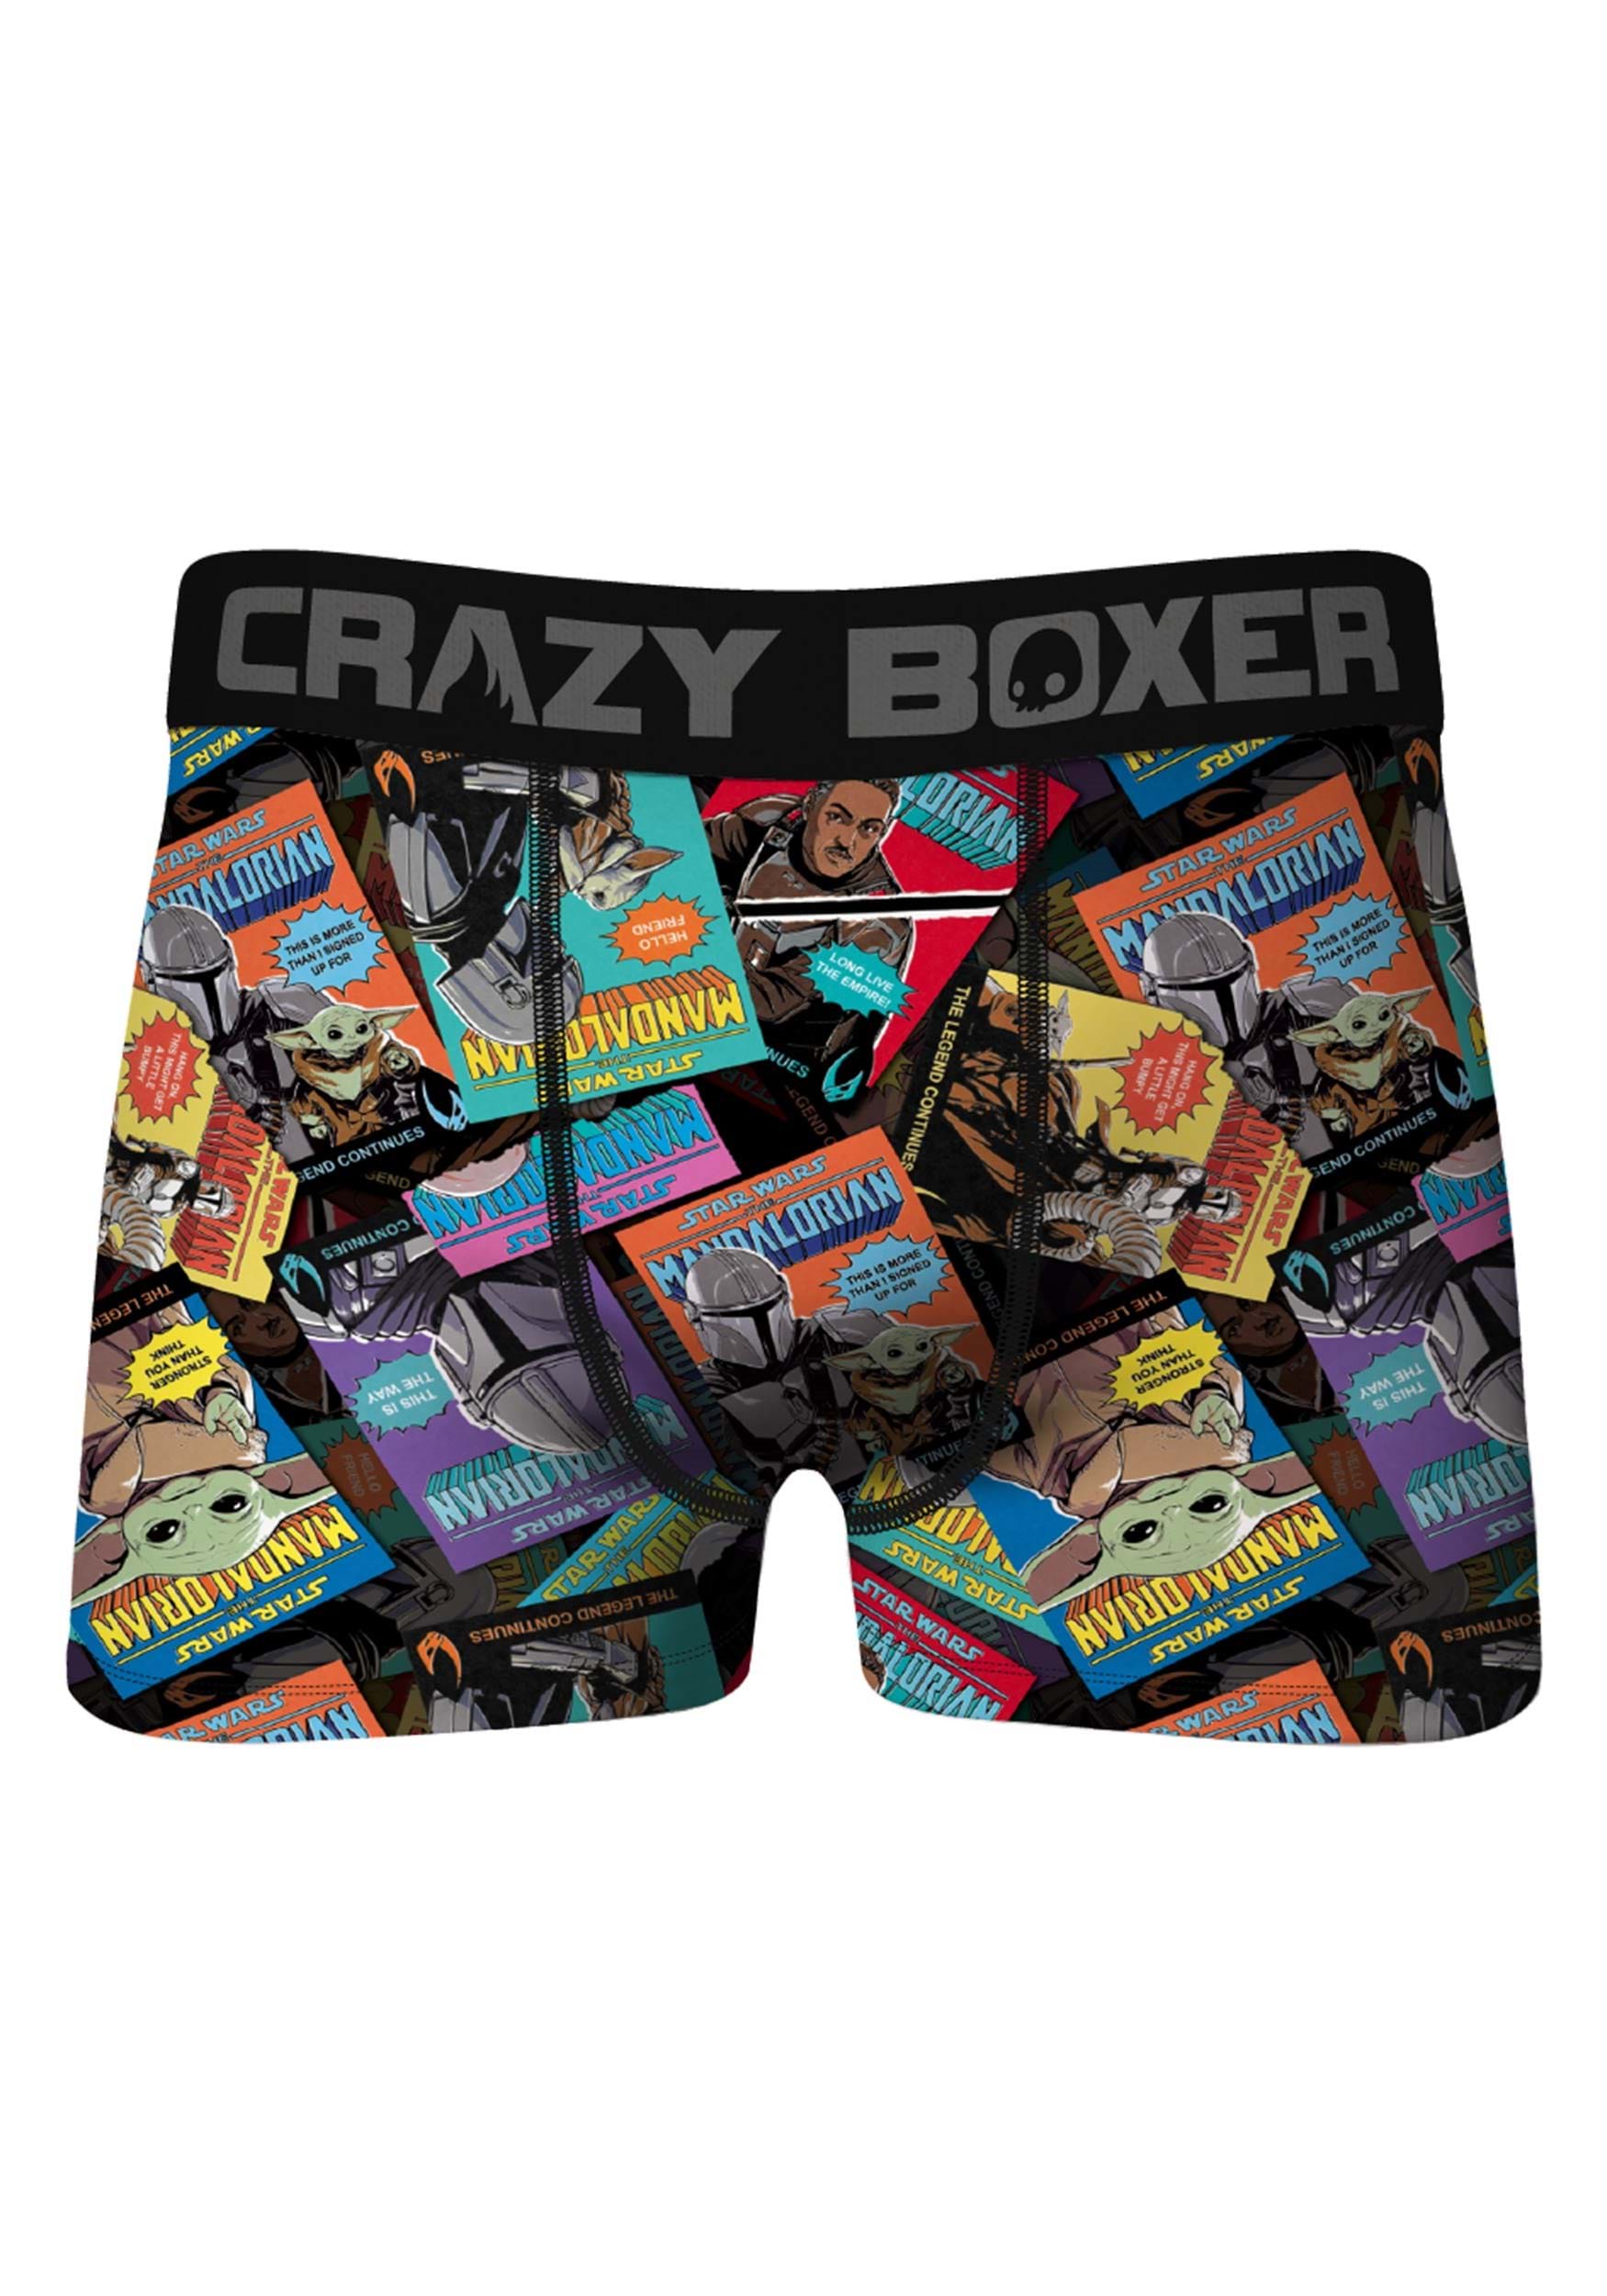 Crazy Boxers Mandalorian Retro Comic Mens Boxer Briefs